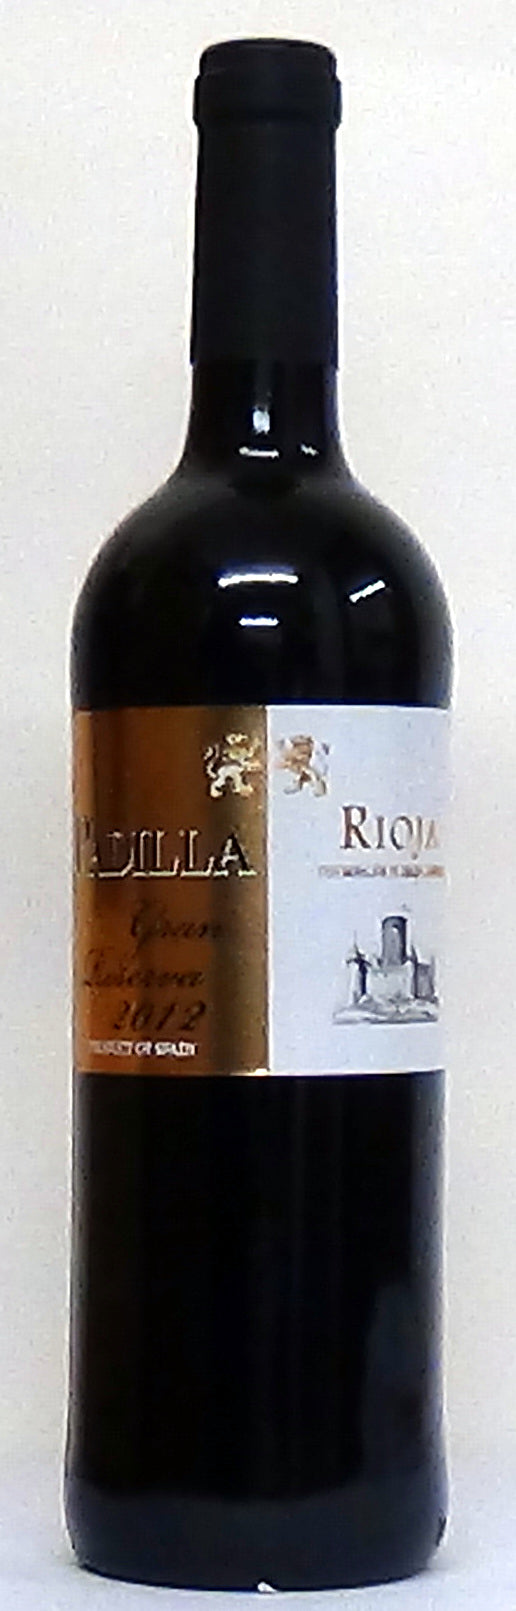 Padilla Gran Reserva Rioja - Spanish Wines - Wines - M&M Personal Vint